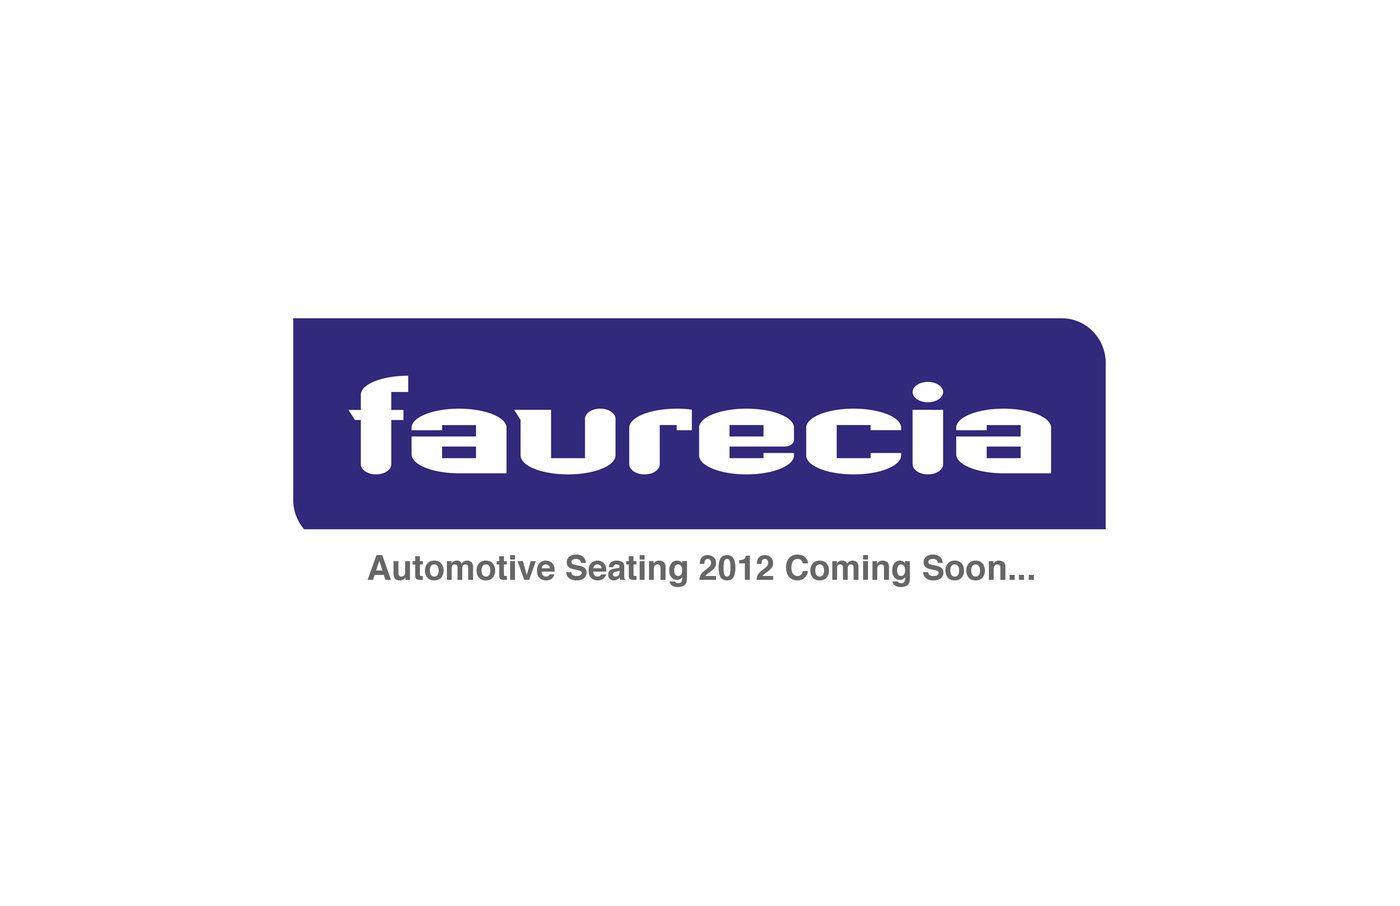 Faurecia Automotive Logo - Faurecia Automotive Seating by Jeremy Rolfs at Coroflot.com